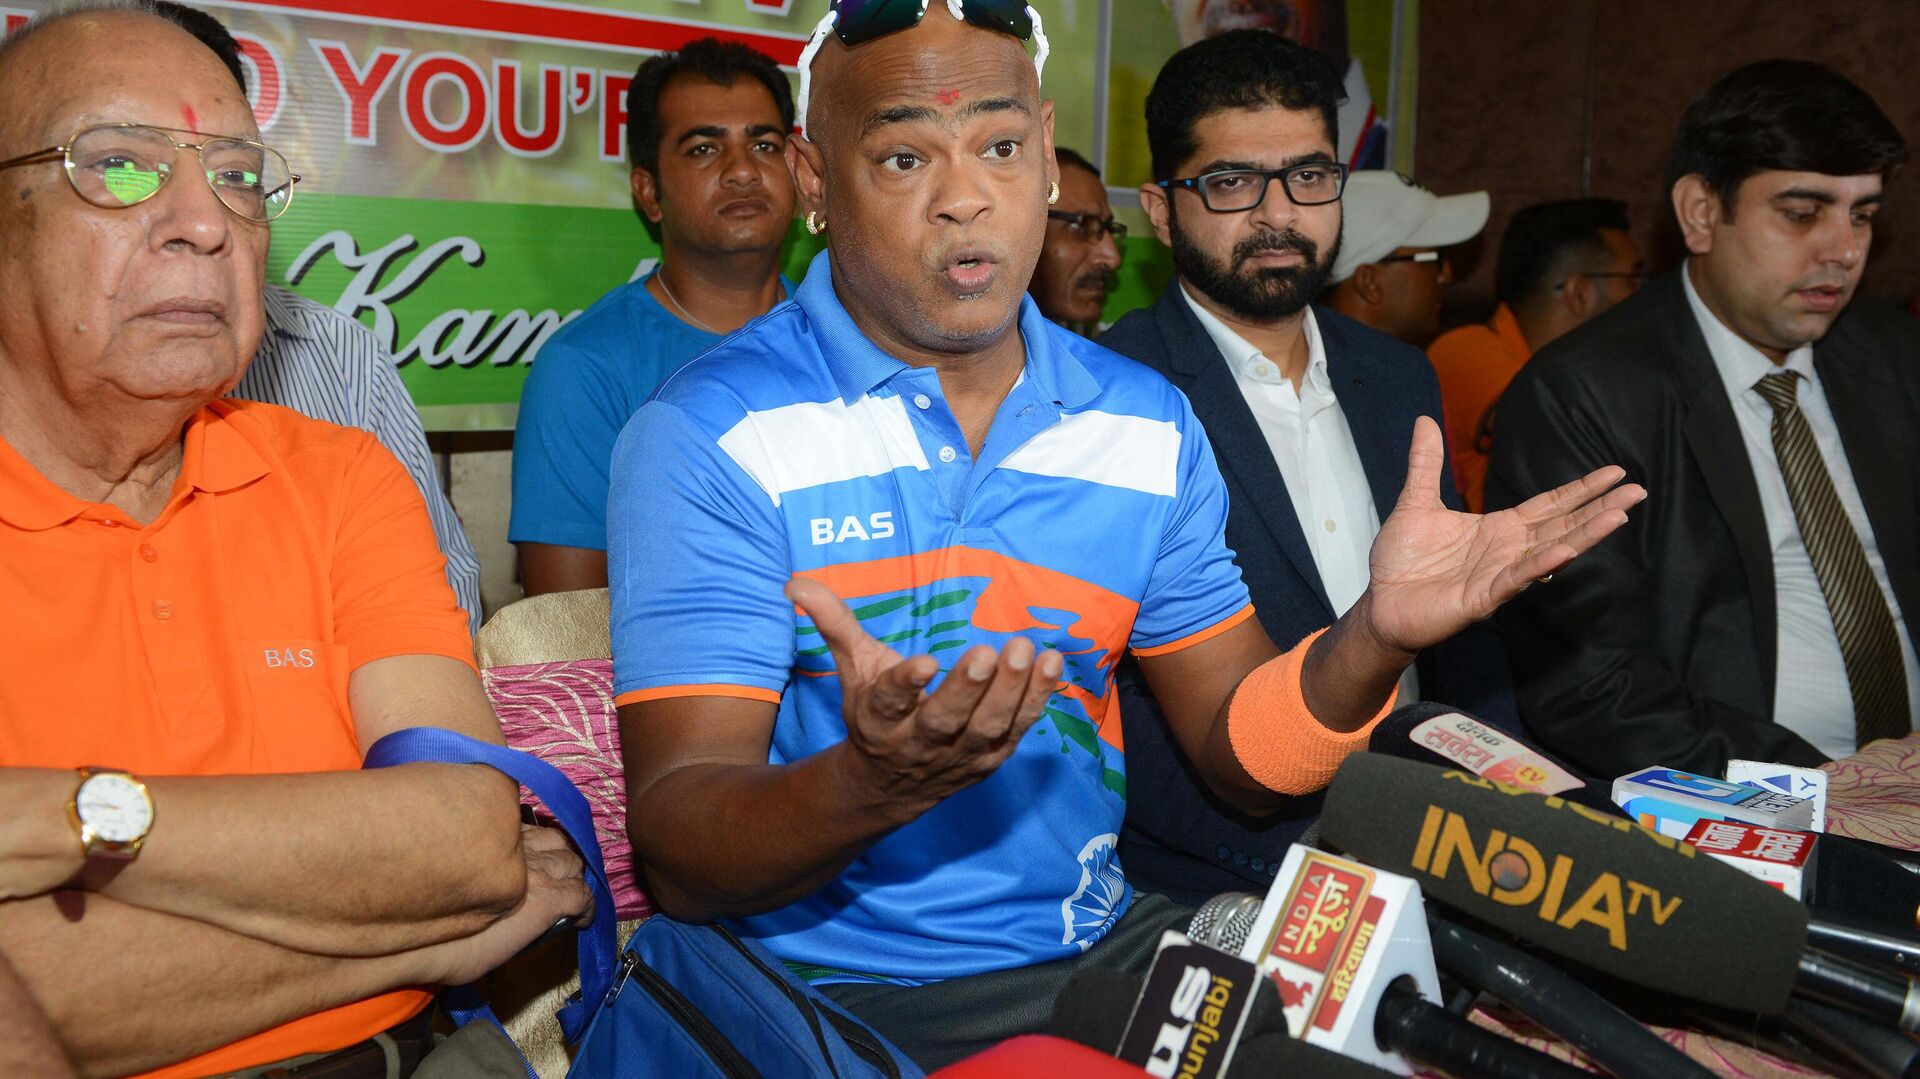 Former Indian cricketer, Vinod Kambli (C) speaks to the media during a press conference in Amritsar on September 8, 2018. (Photo by NARINDER NANU / AFP) - Sputnik India, 1920, 05.02.2023